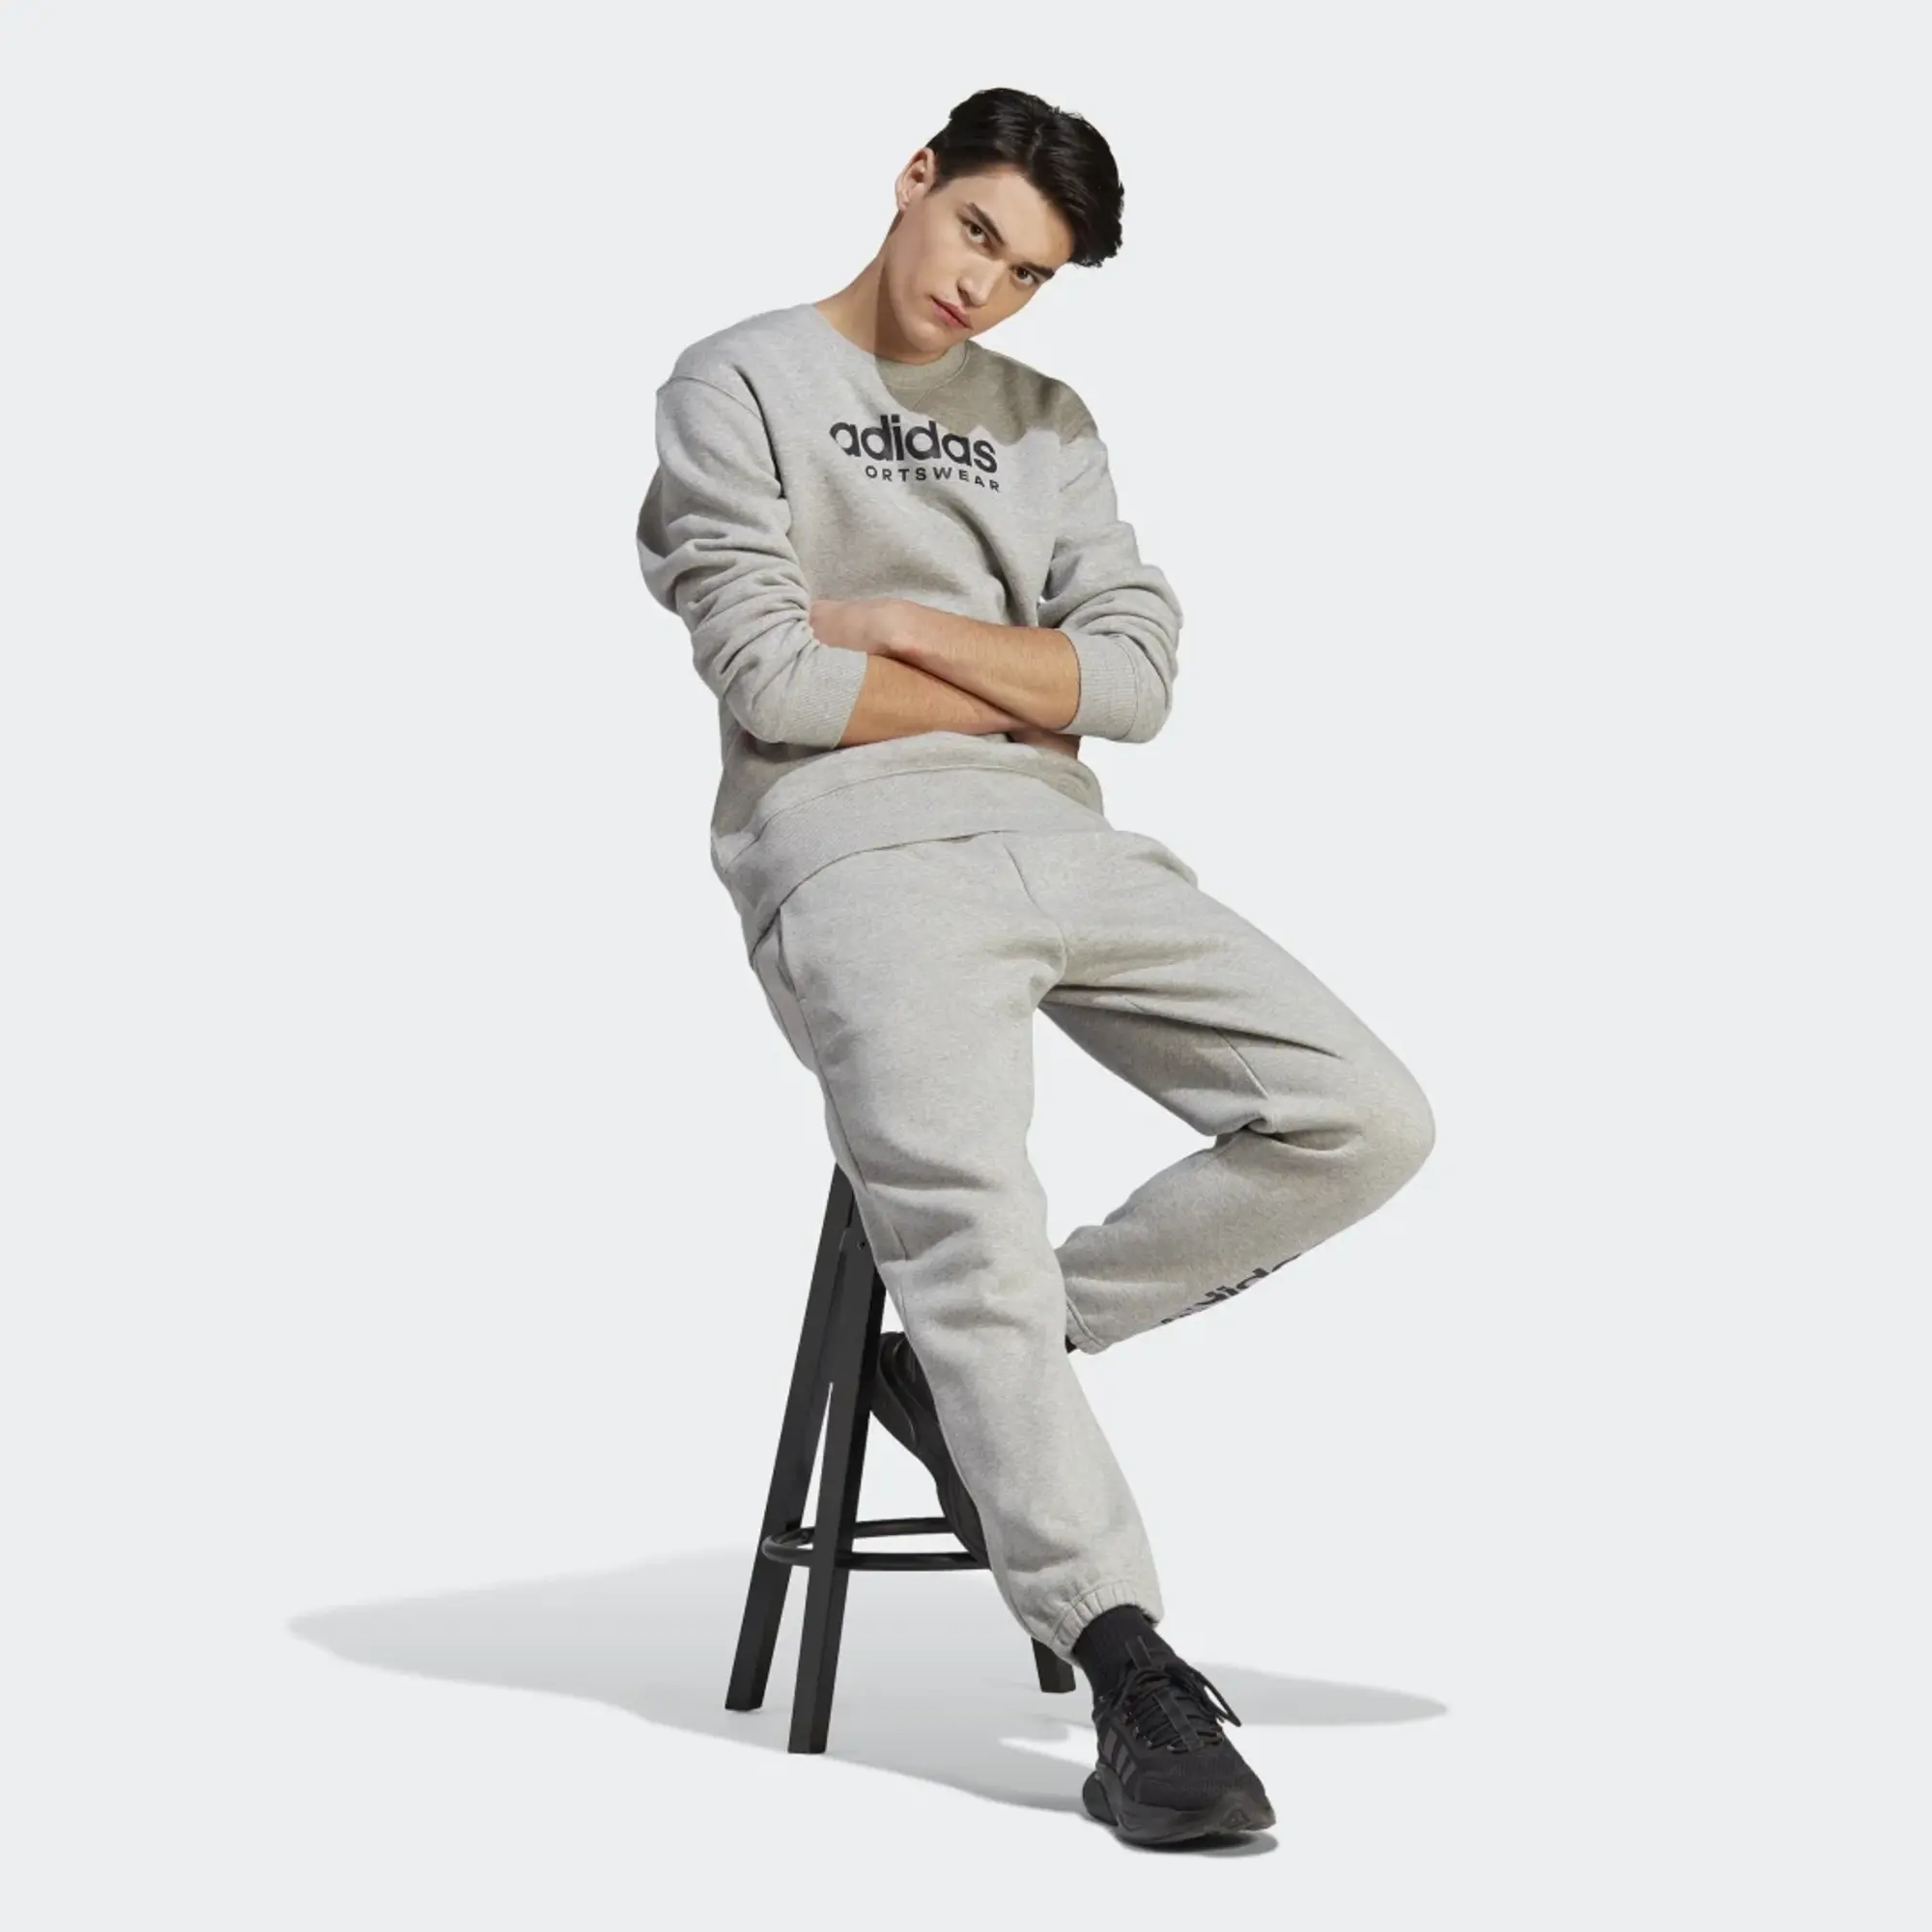 adidas Sportswear All Szn Fleece Graphic Sweatshirt - Grey, Grey